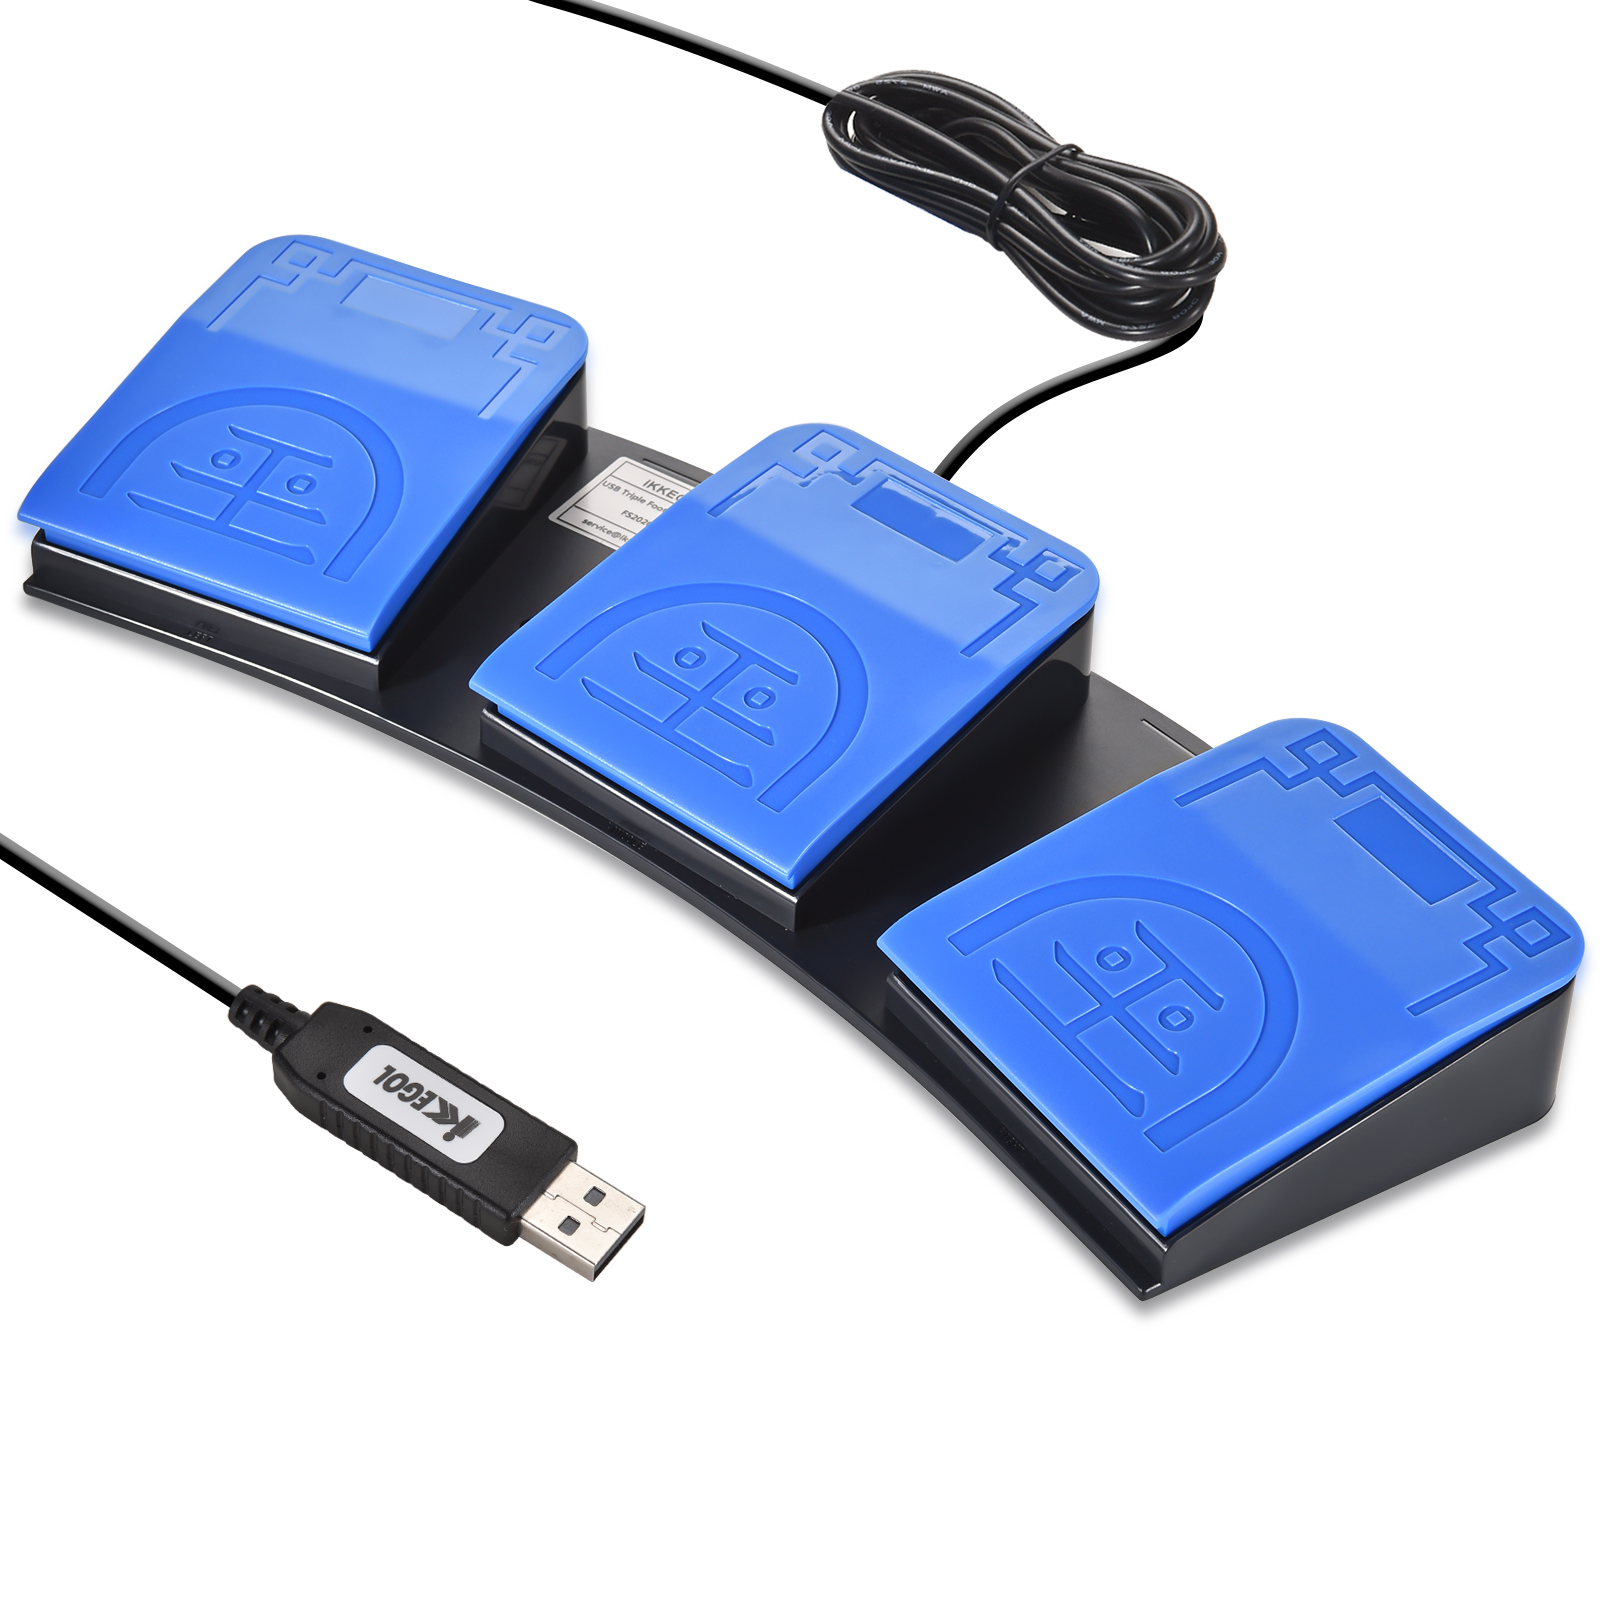 iKKEGOL Upgraded USB Triple Foot Optics Blue Pedal Switch